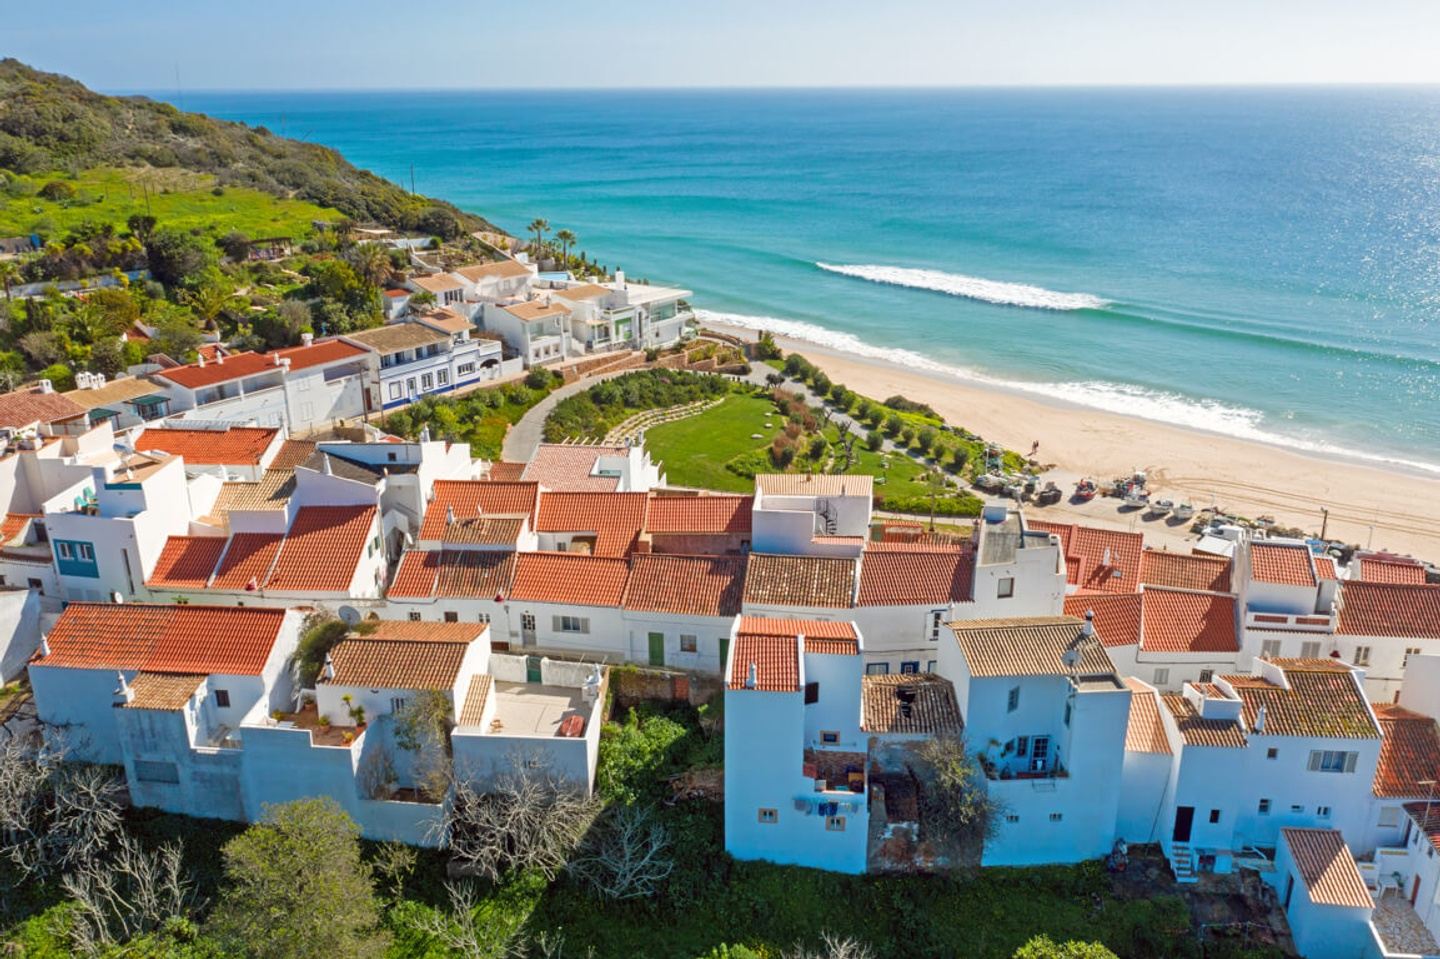 Seaside Yoga Retreat on Wild and Scenic Algarve Coast of Portugal